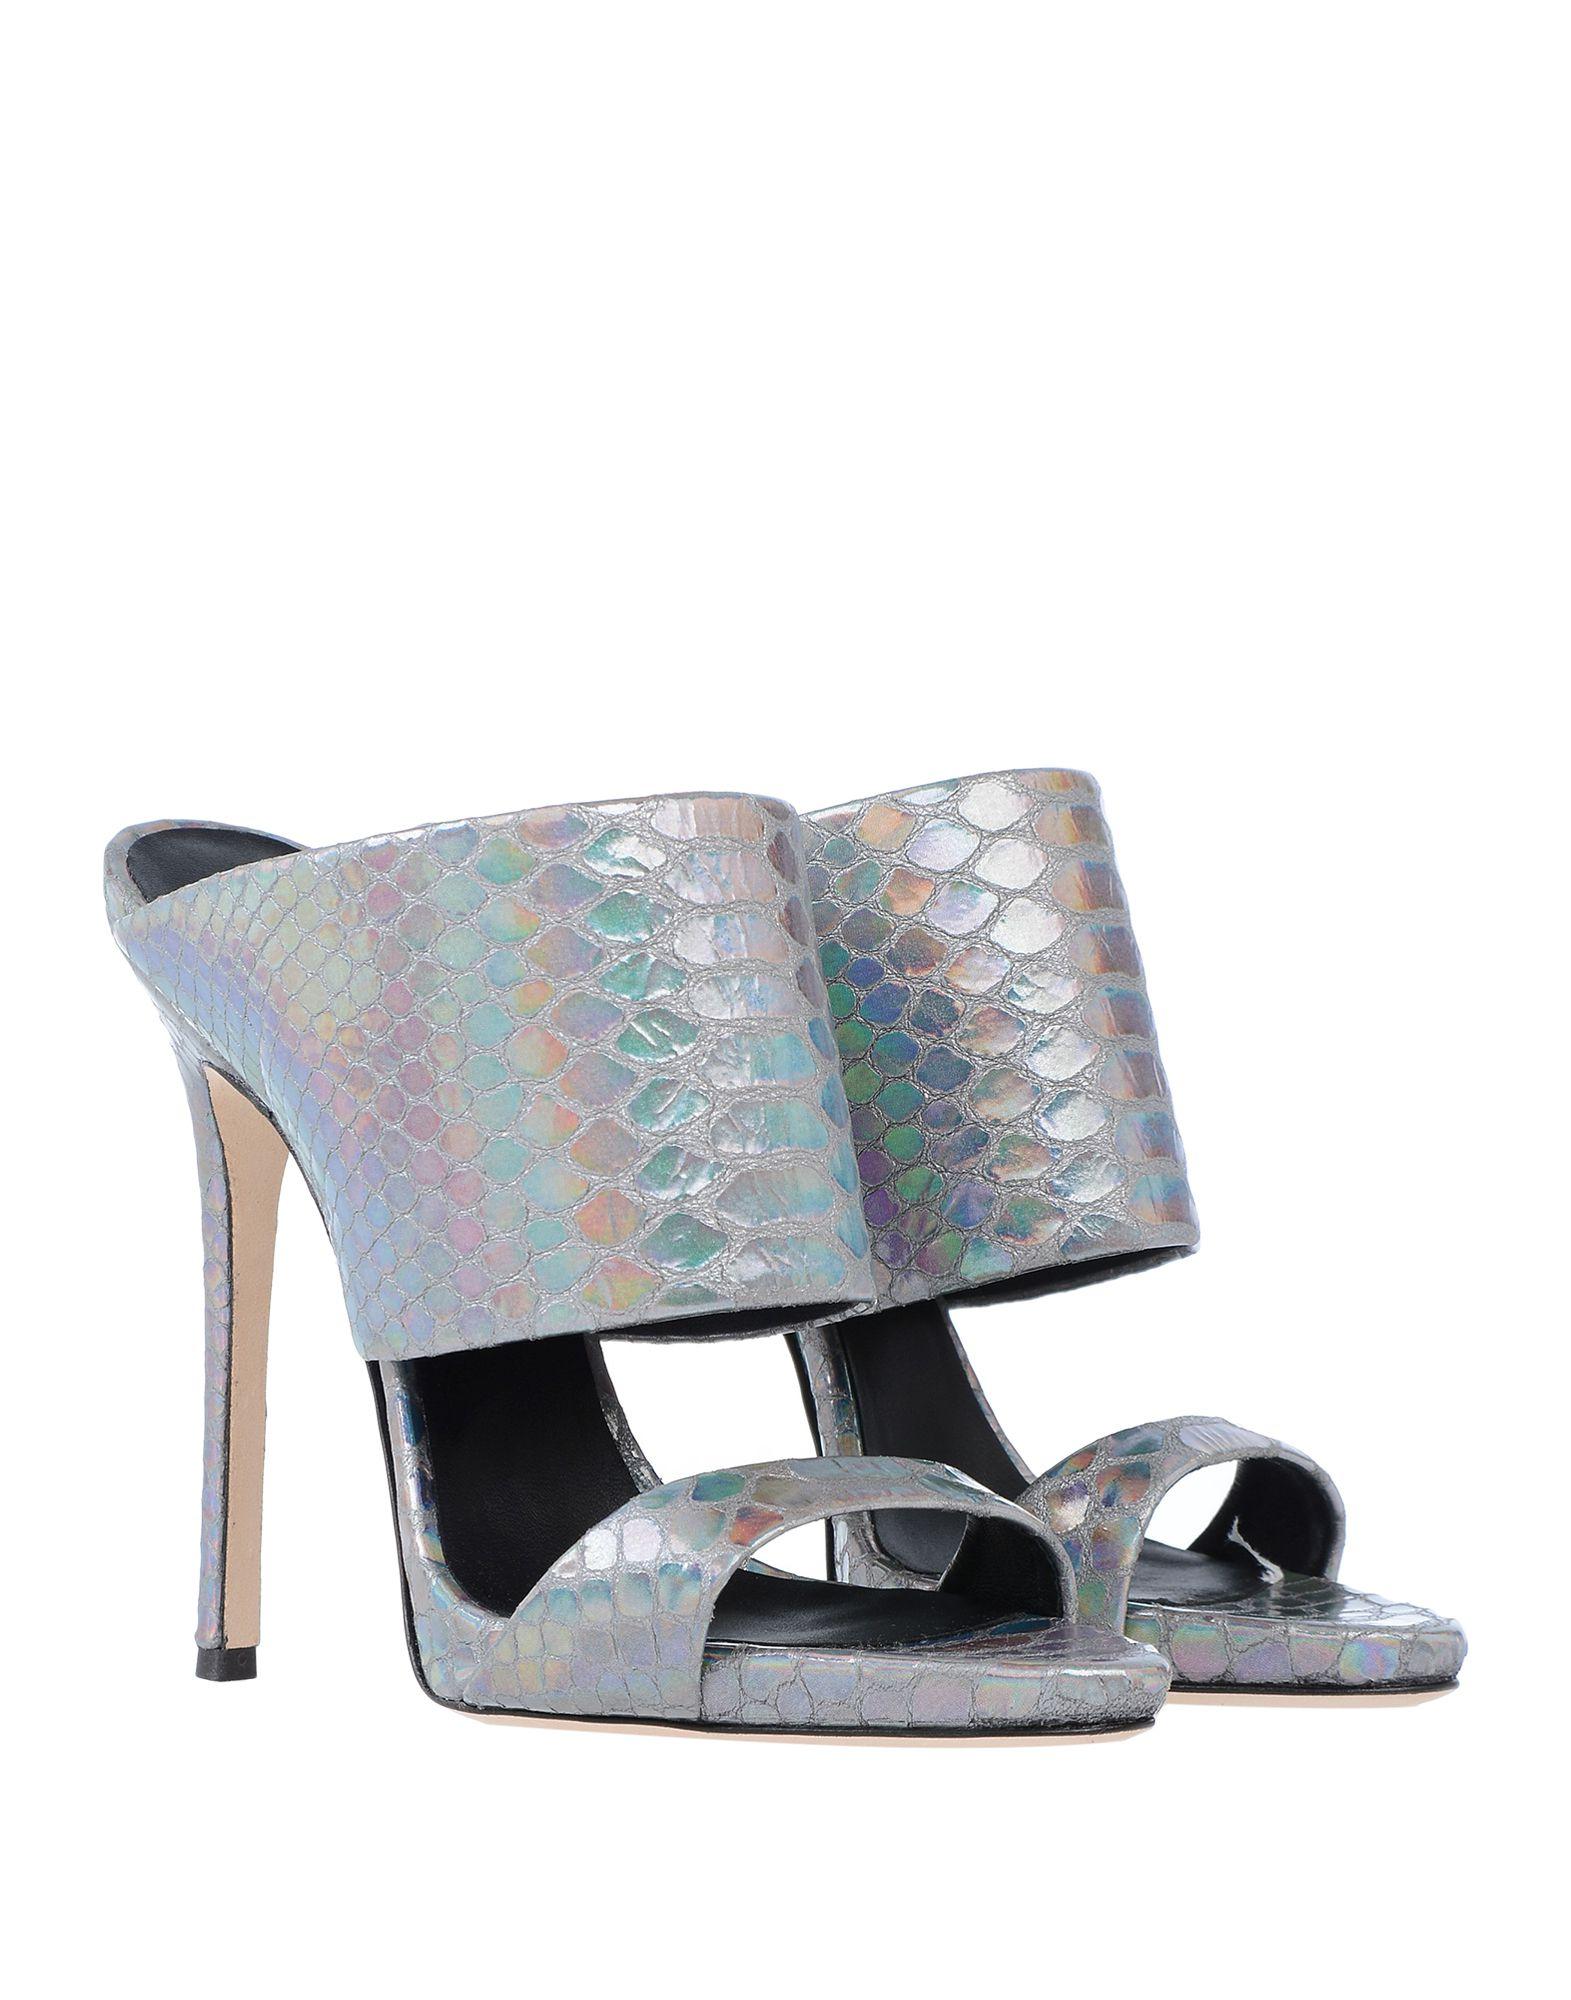  Giuseppe Zanotti NEW Silver Slides Mules Evening High Heels Sandals in Box (Silber)